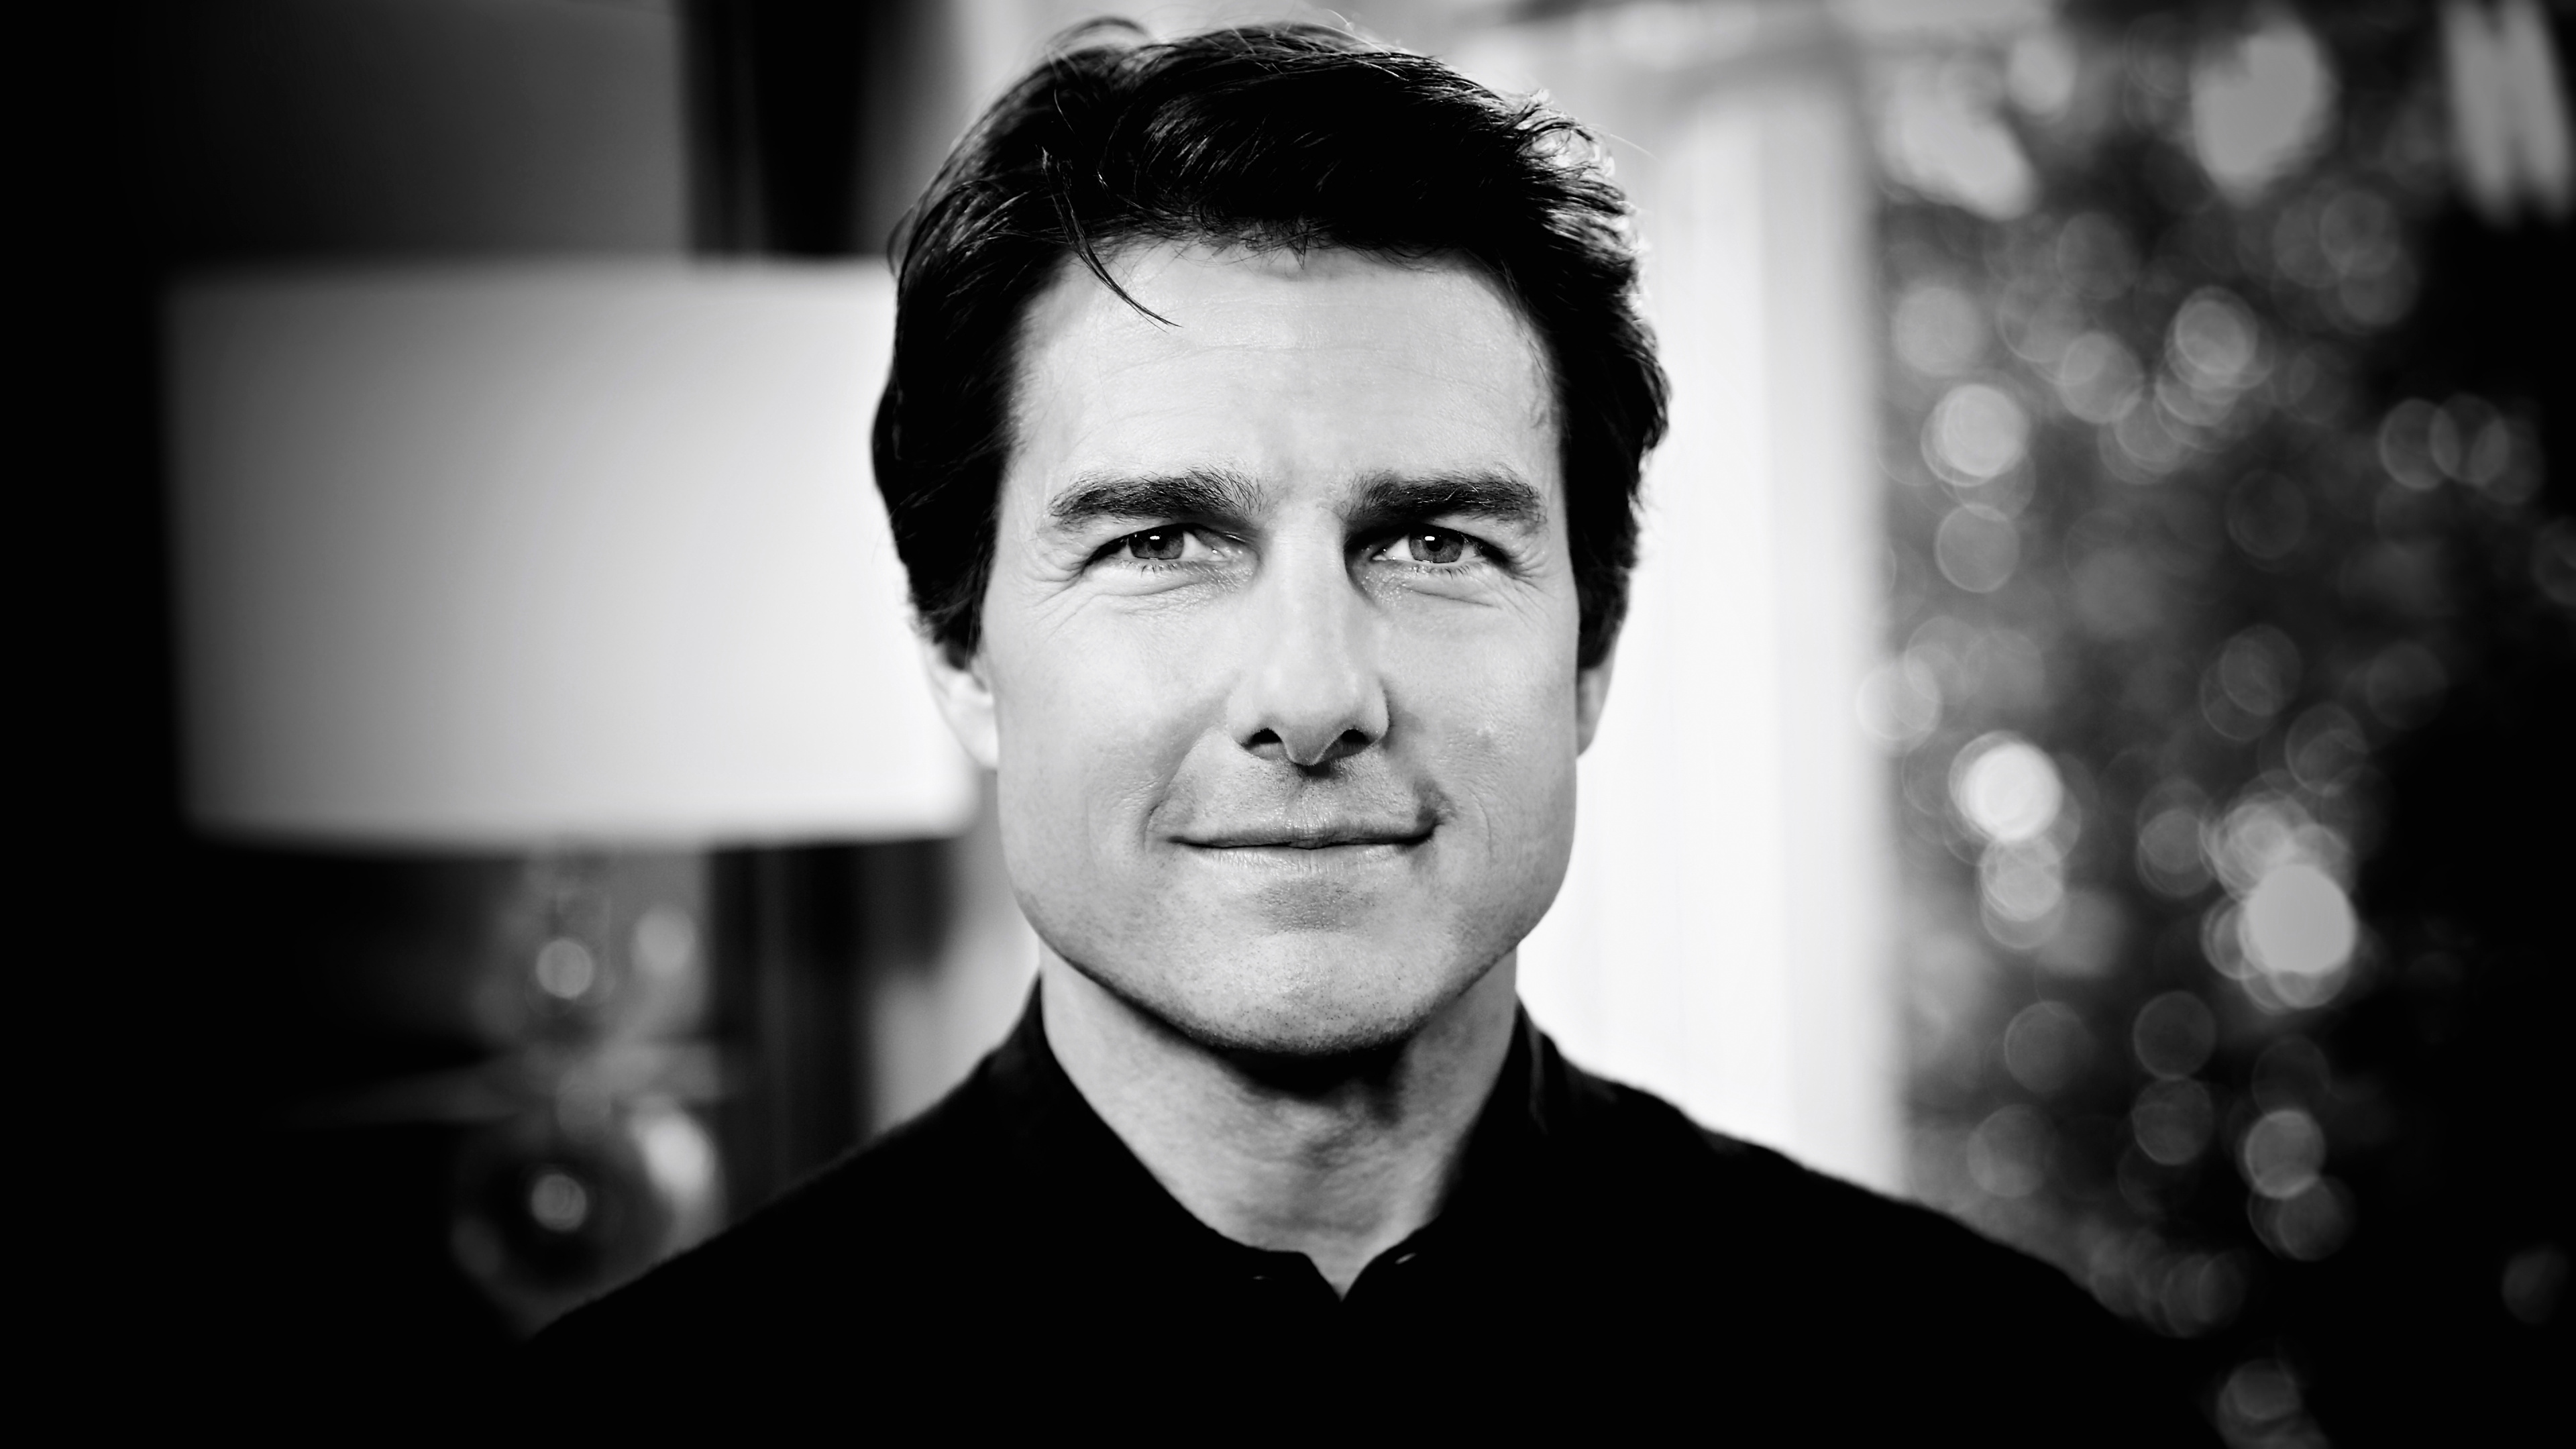 Tom Cruise, Noir et Blanc, Portrait, Face, Menton. Wallpaper in 3840x2160 Resolution